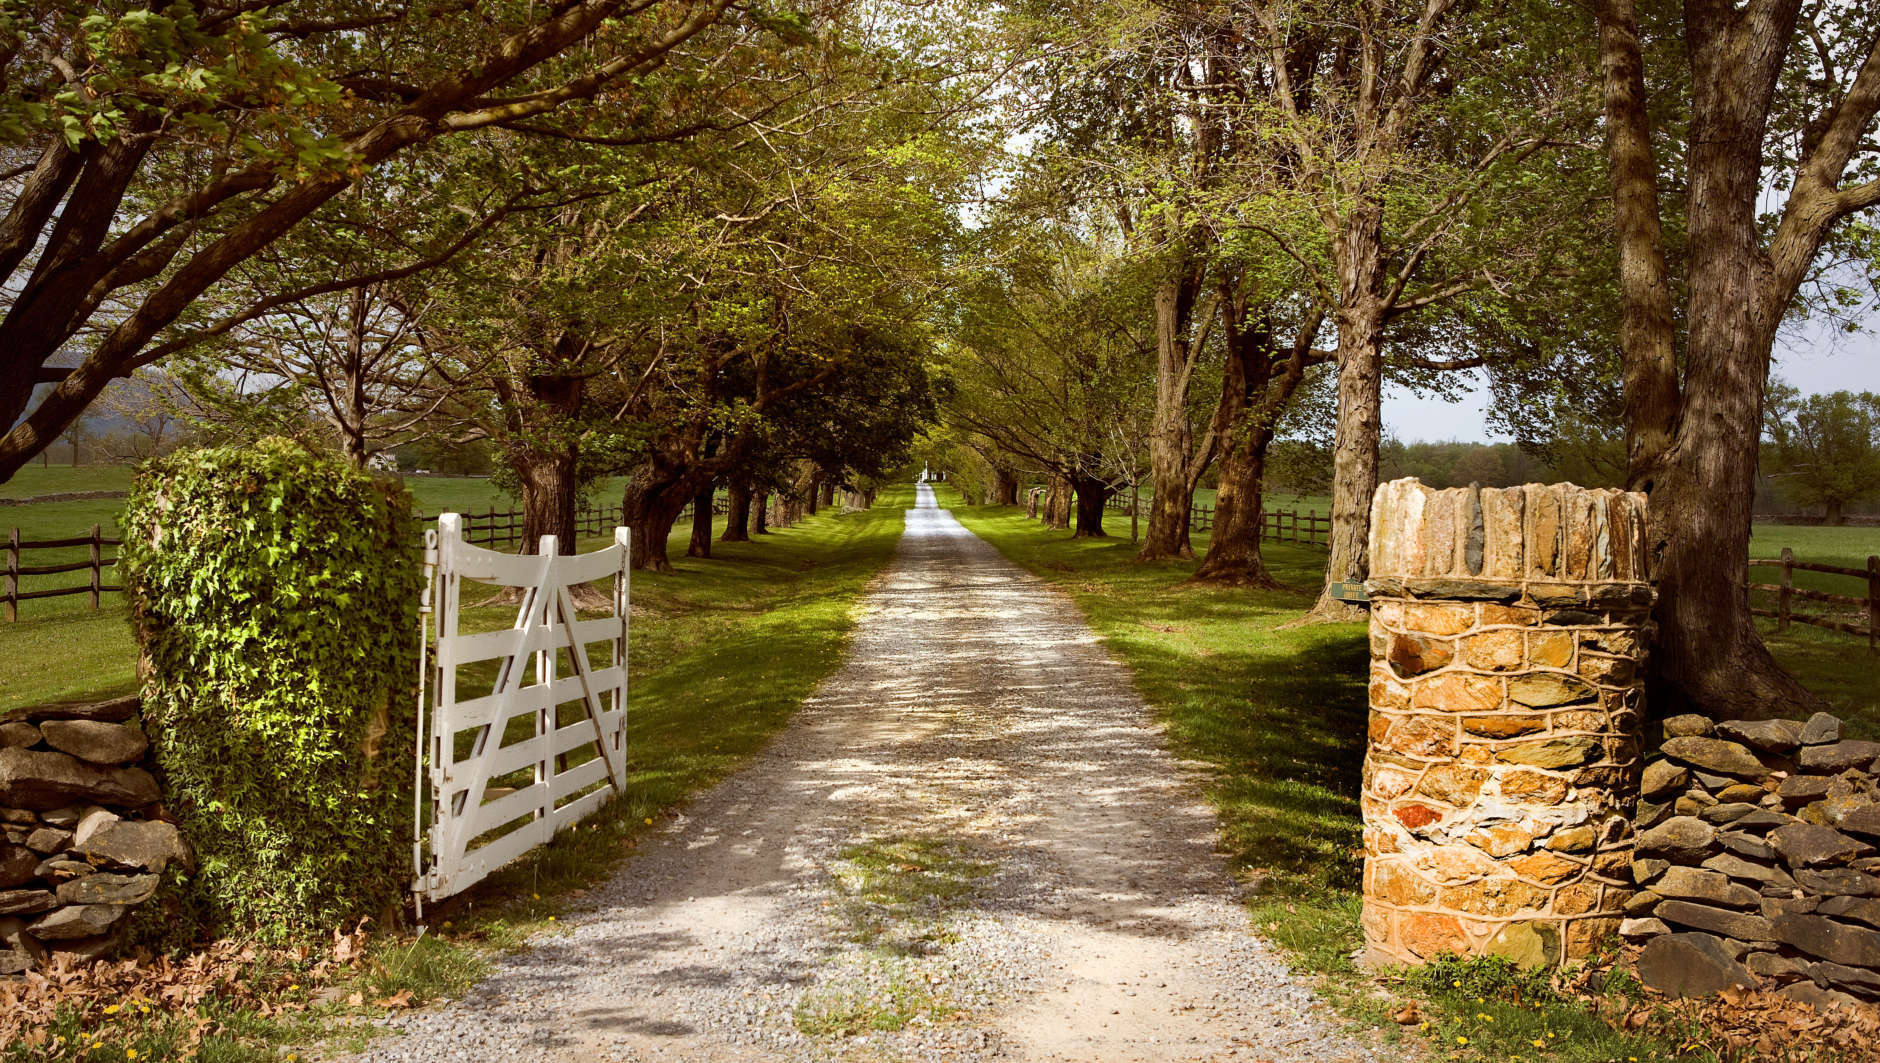 Entrance to plantation in Middleburg